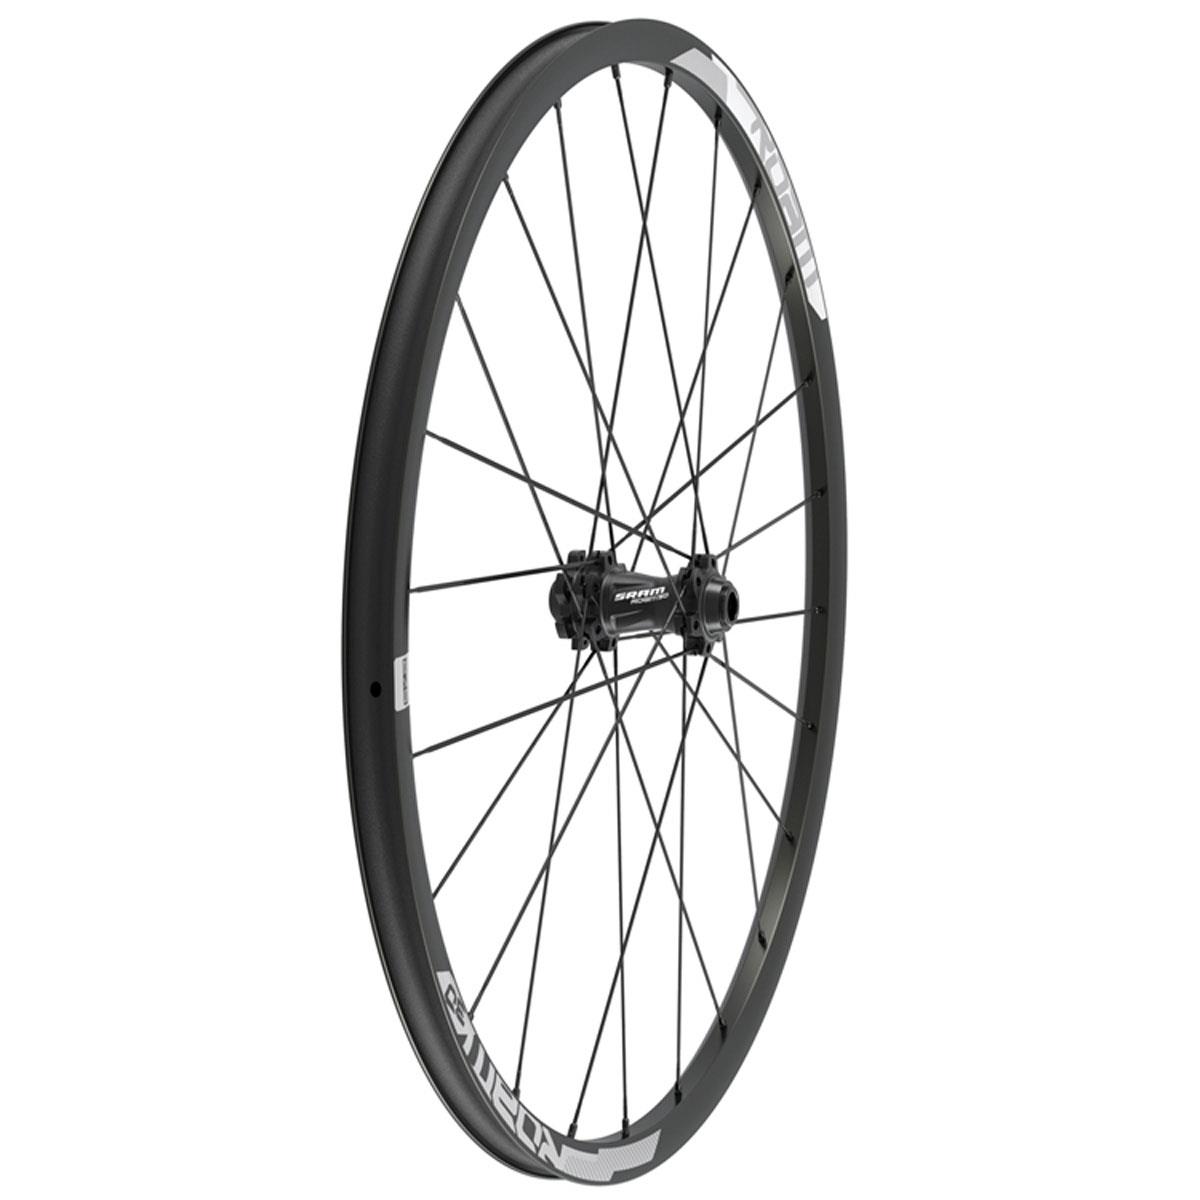 SRAM Roam 30 26 inch Front Tubeless Disc Bicycle Wheel   00.1918.185.000